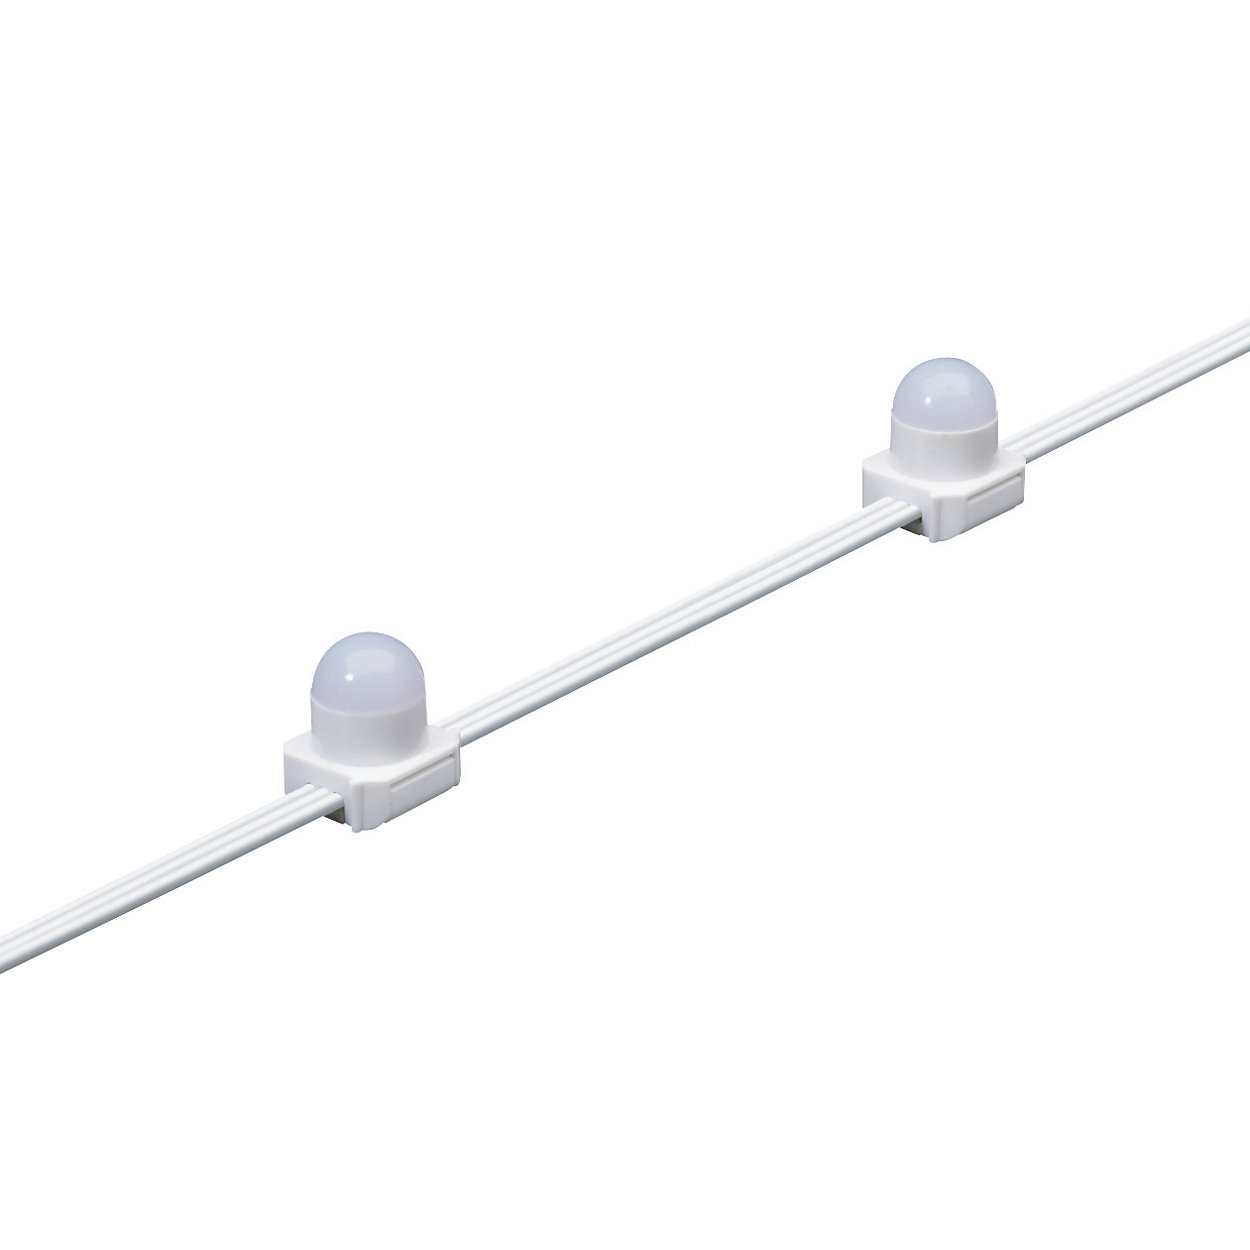 iColor Flex MX gen2 – flexible strands of large high-intensity LED nodes with intelligent color light